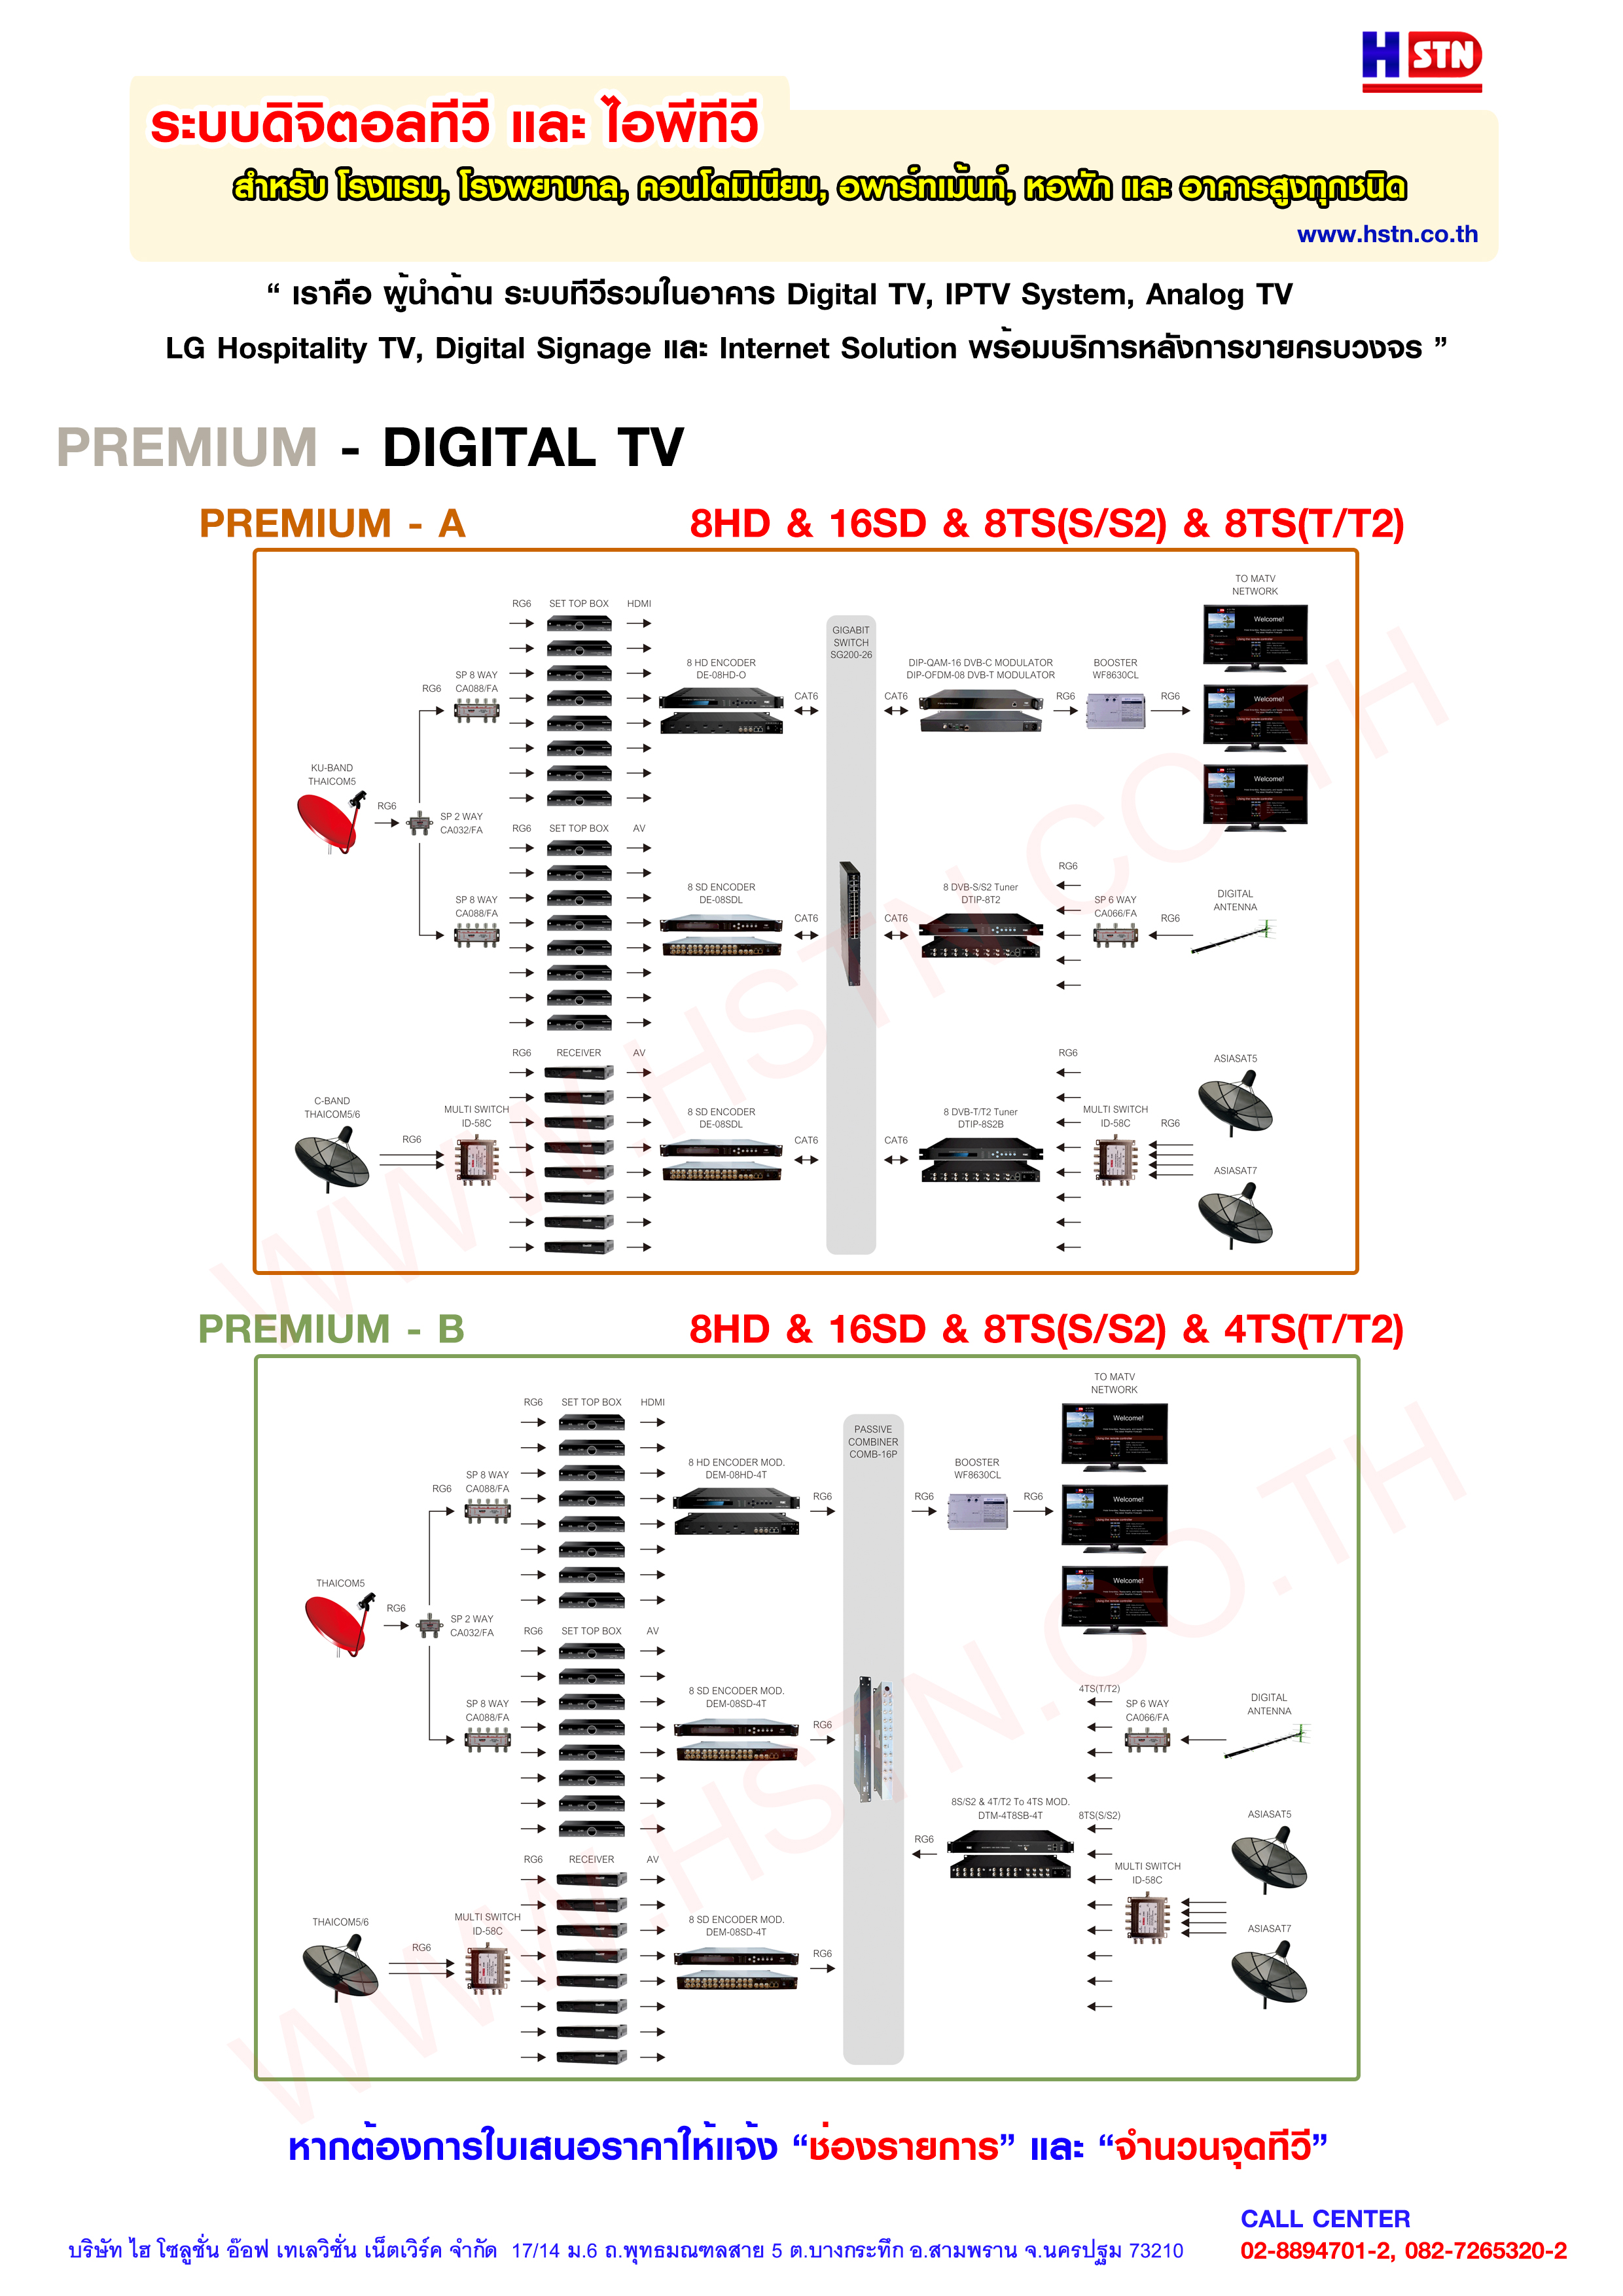 Premium - Digital TV โดย HSTN